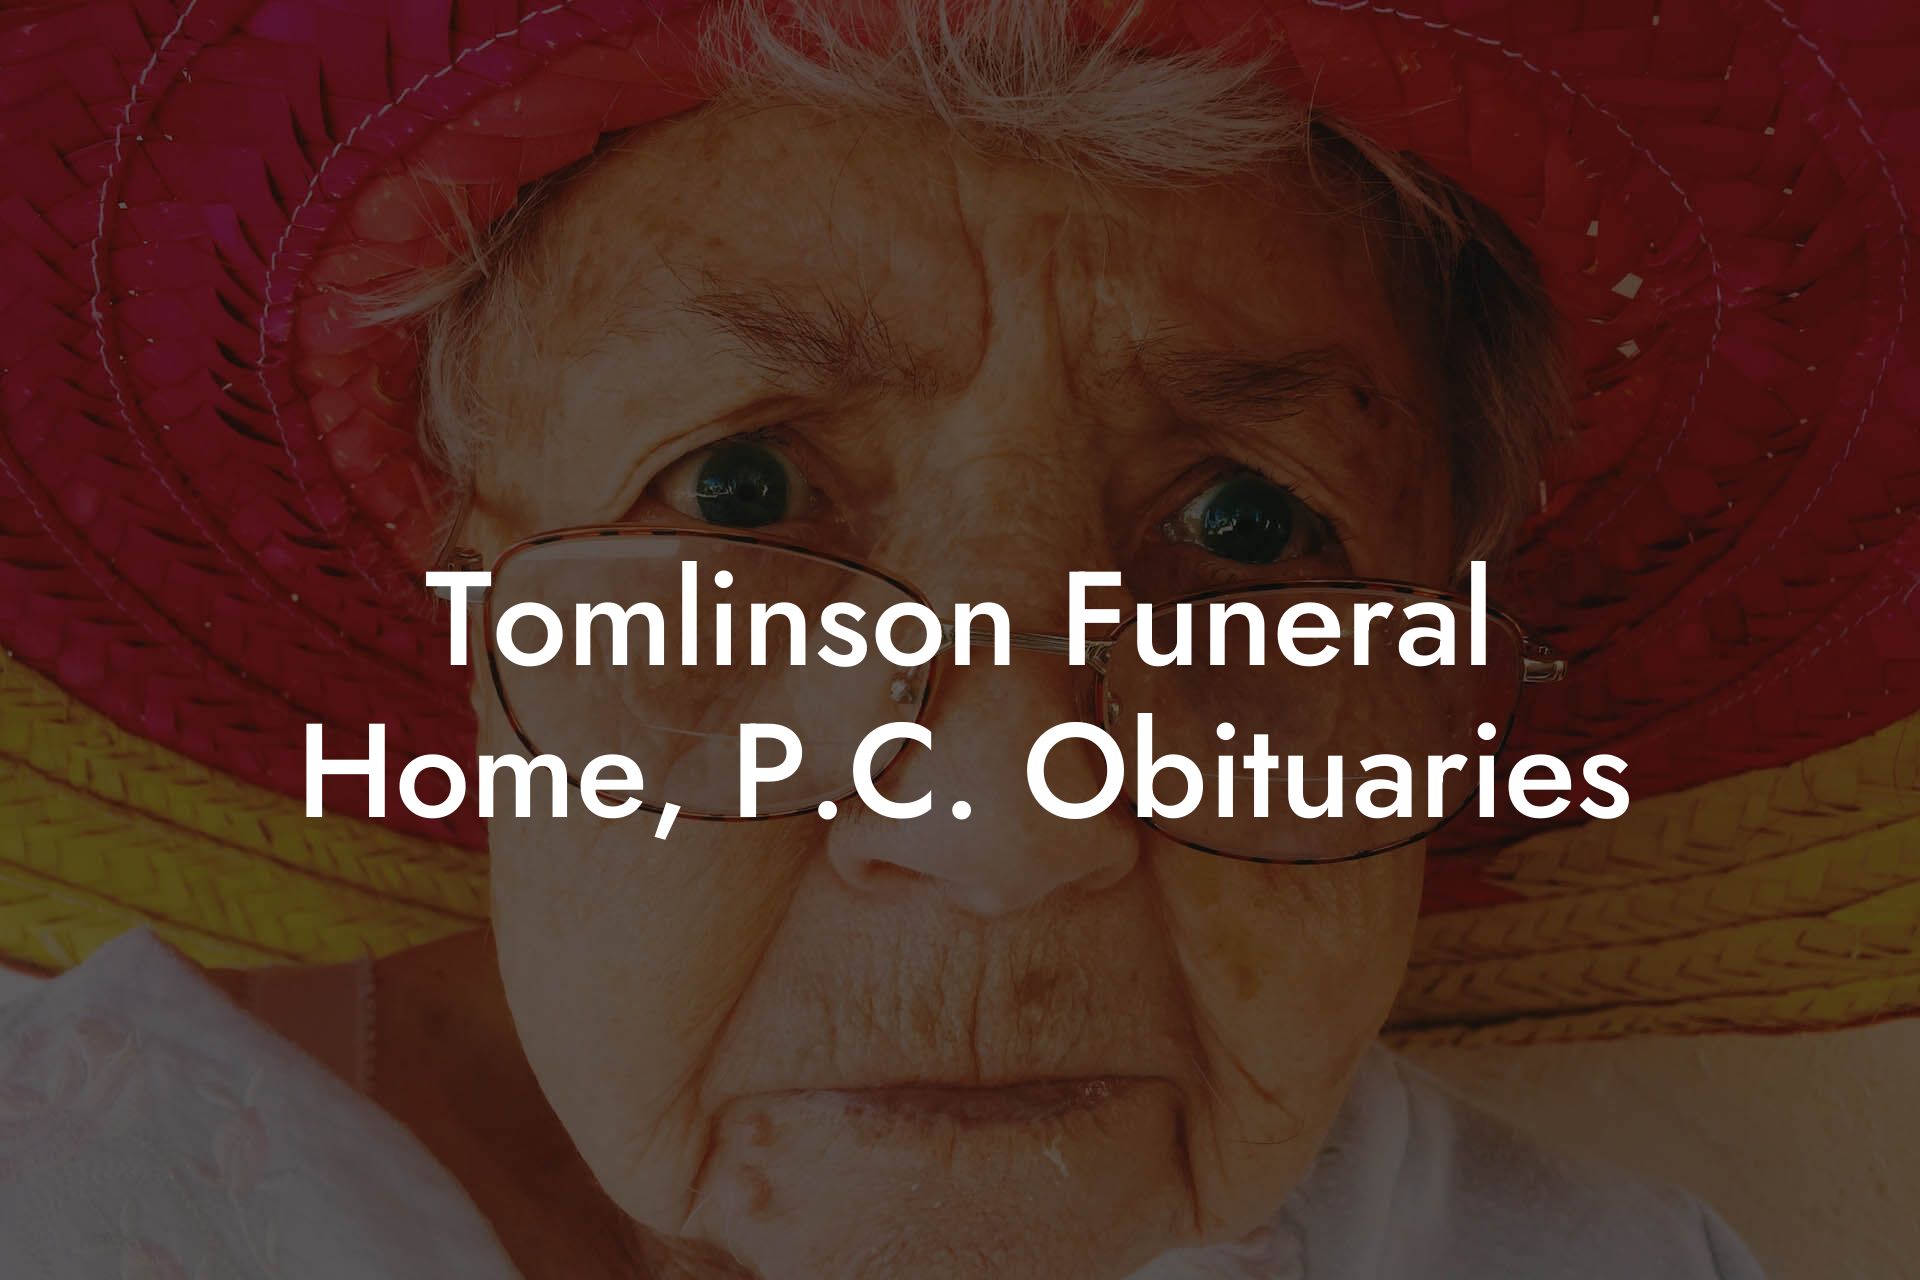 Tomlinson Funeral Home, P.C. Obituaries